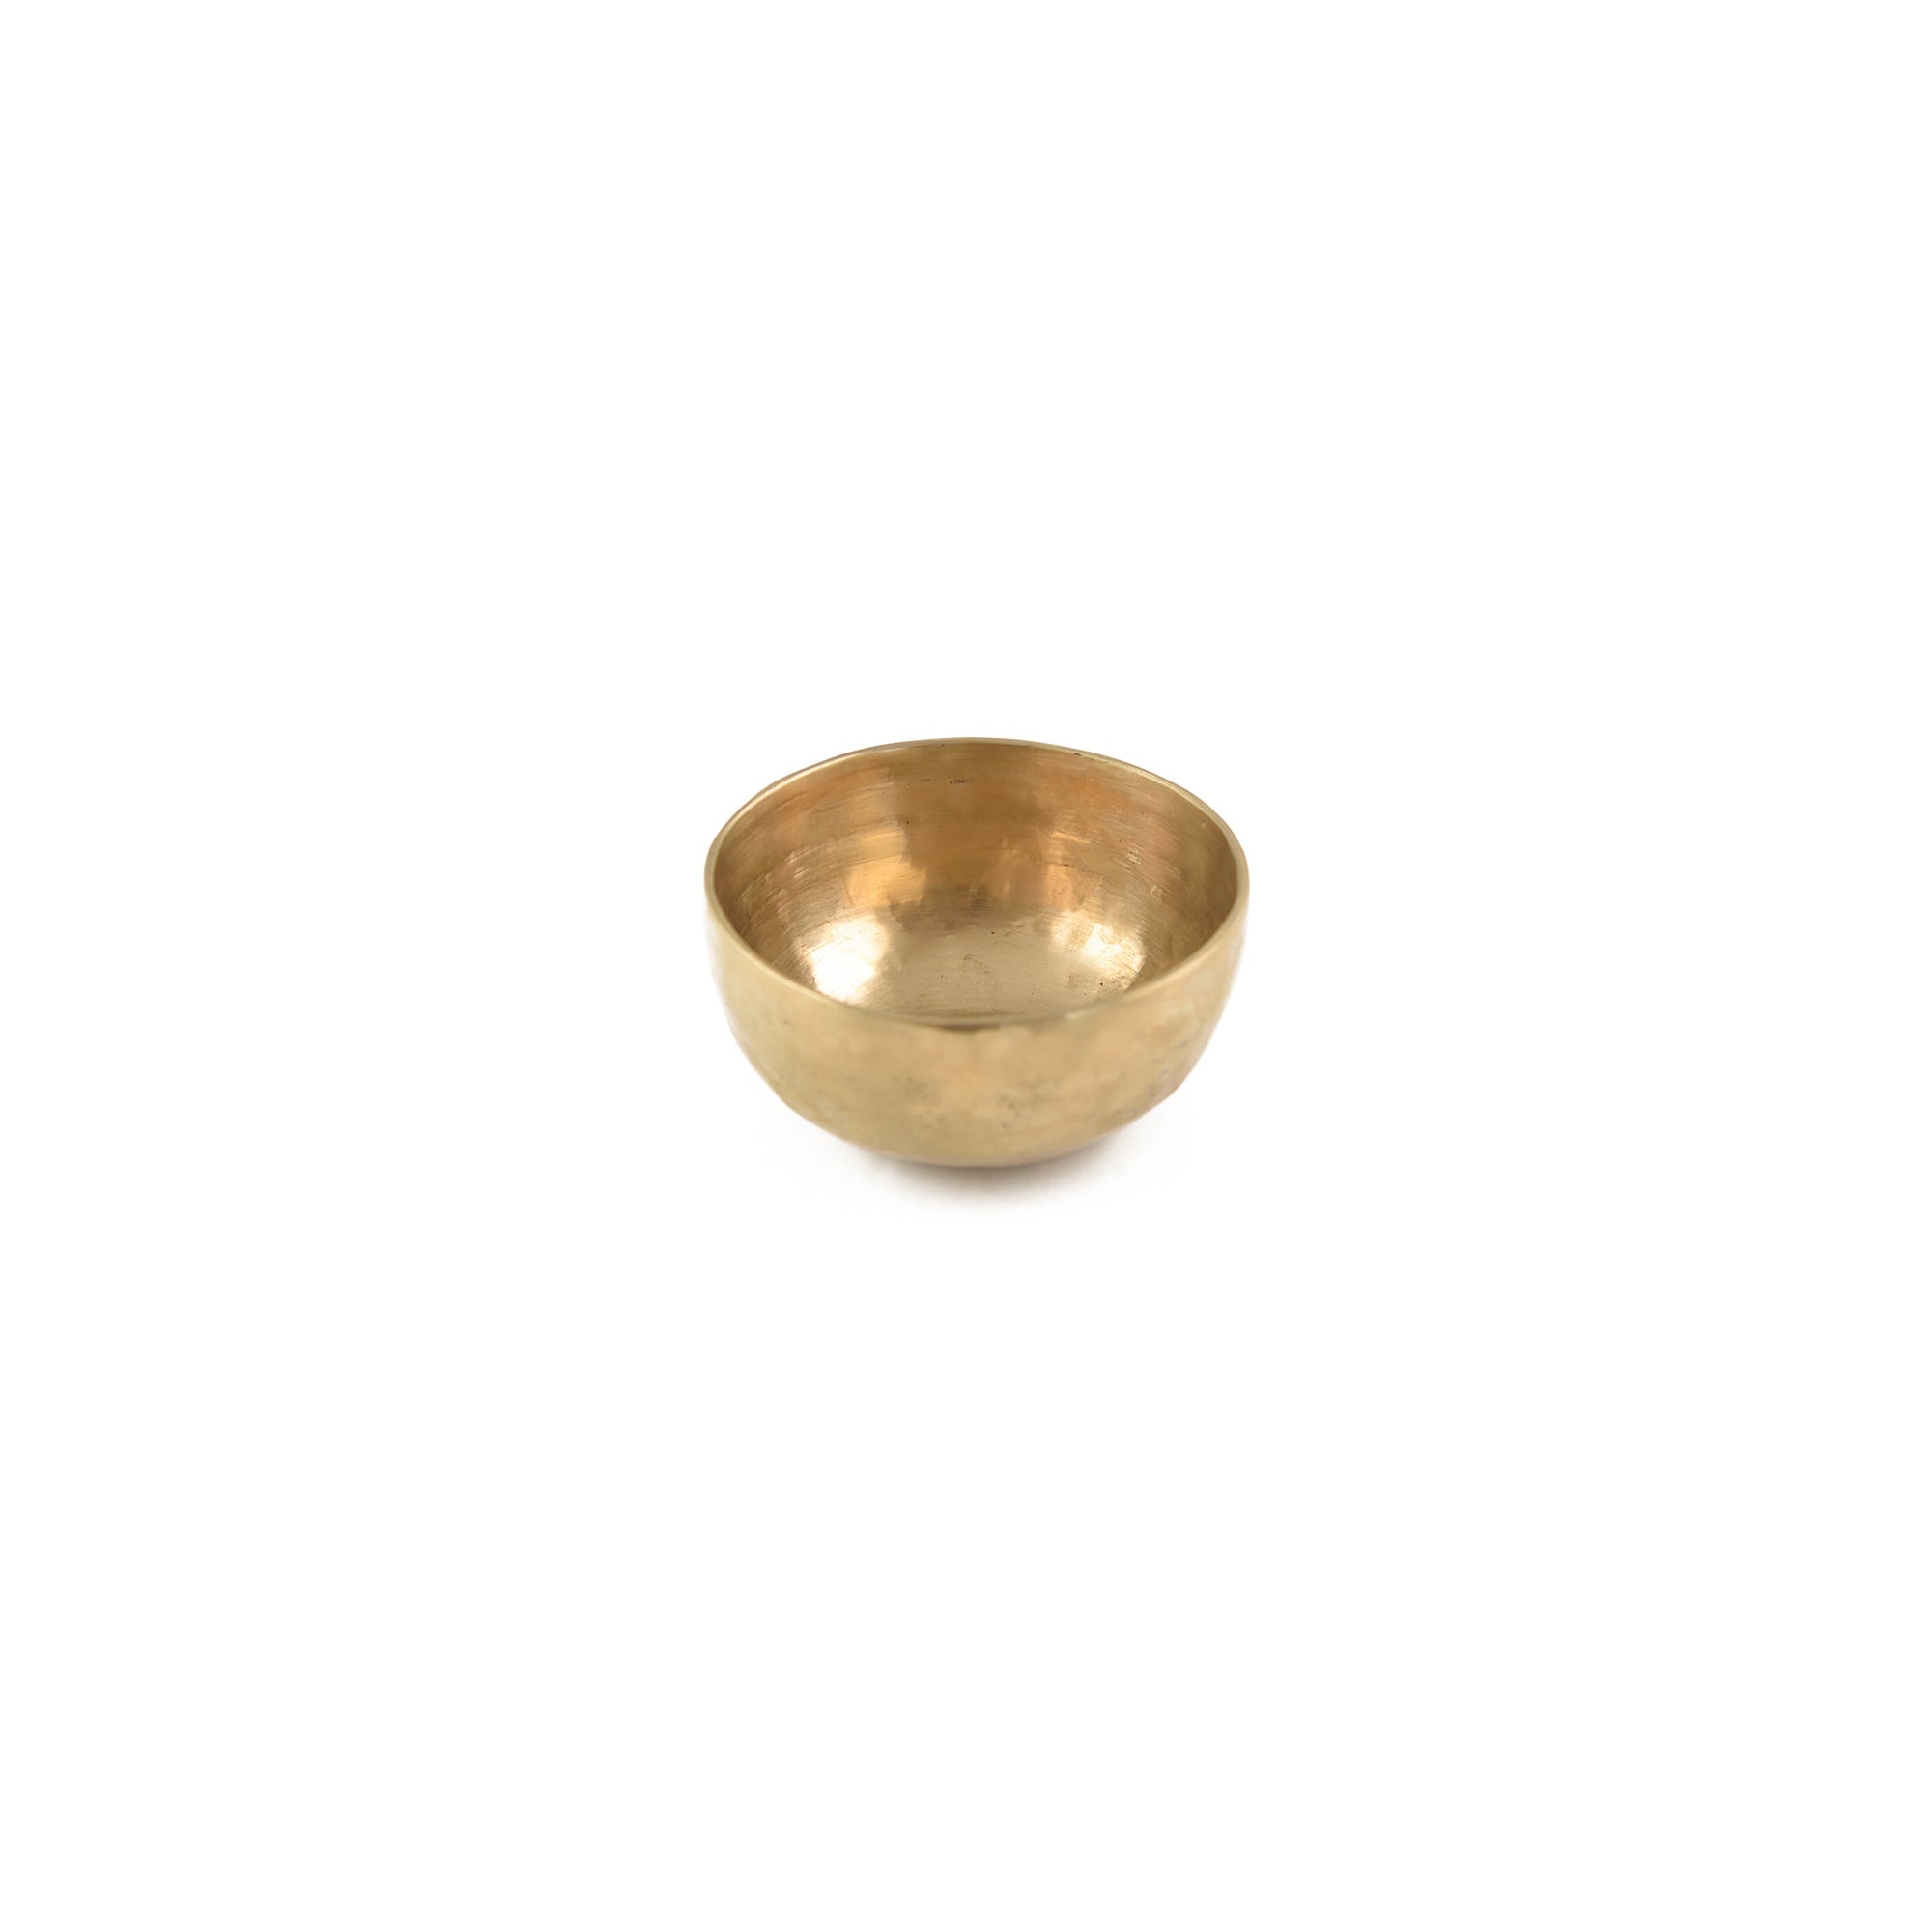 Tibetan Singing Bowl (Small) 200-399 gm